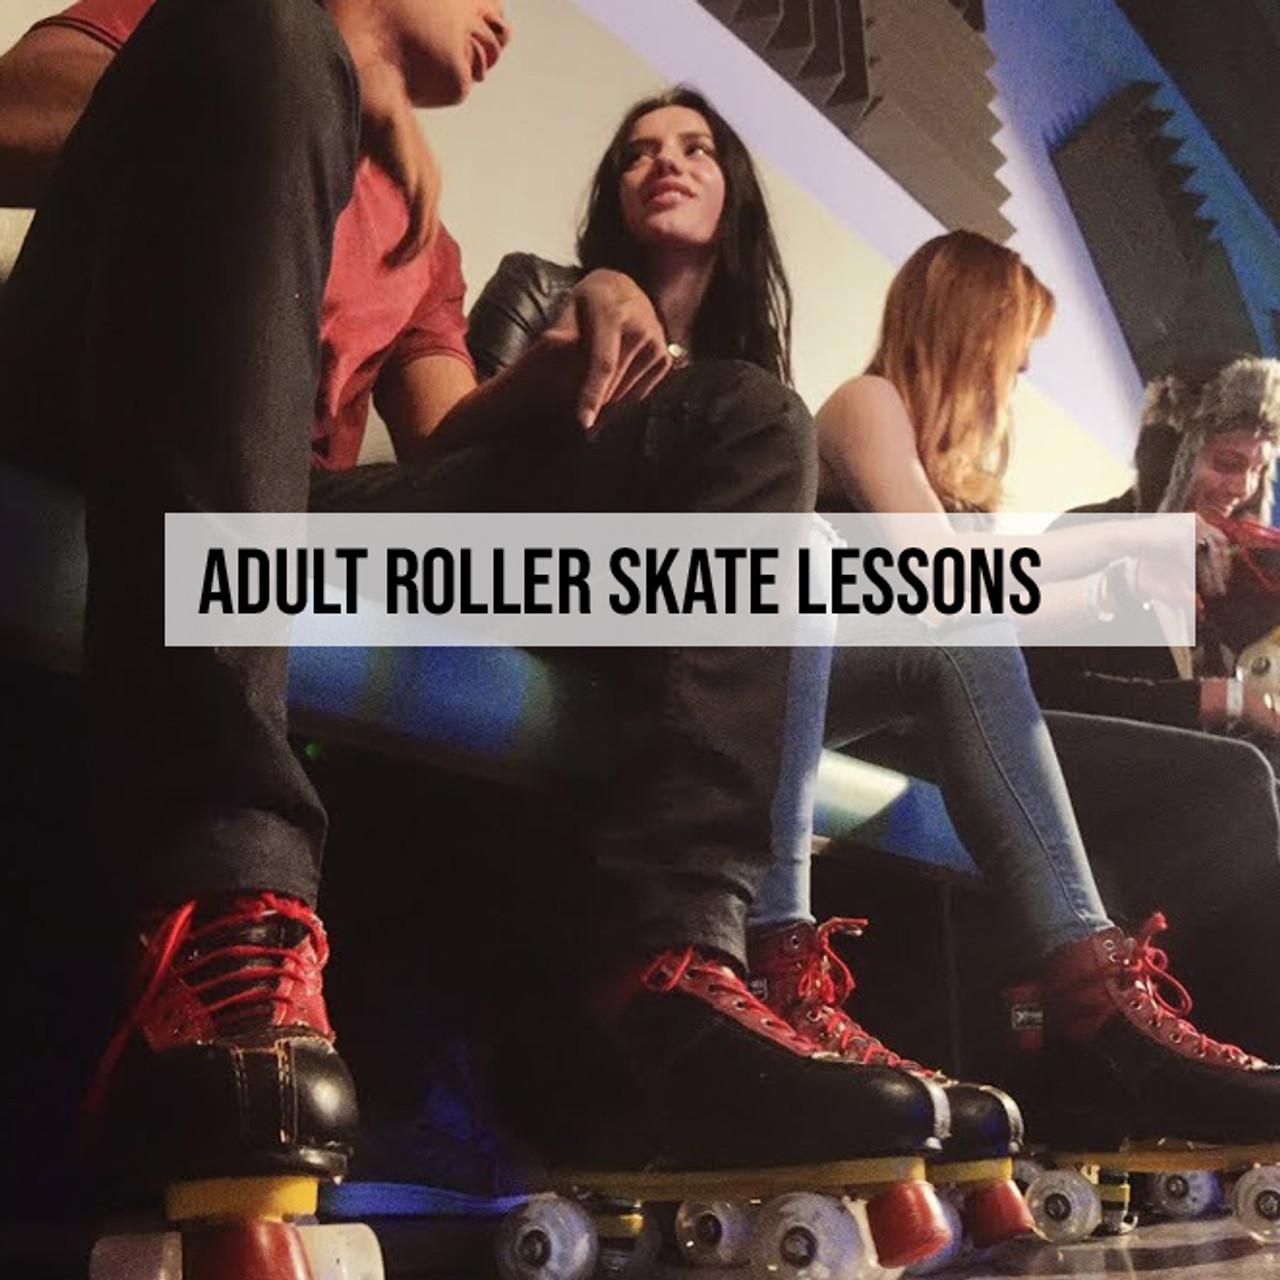 Adult Roller Skate Lessons - RollBack World